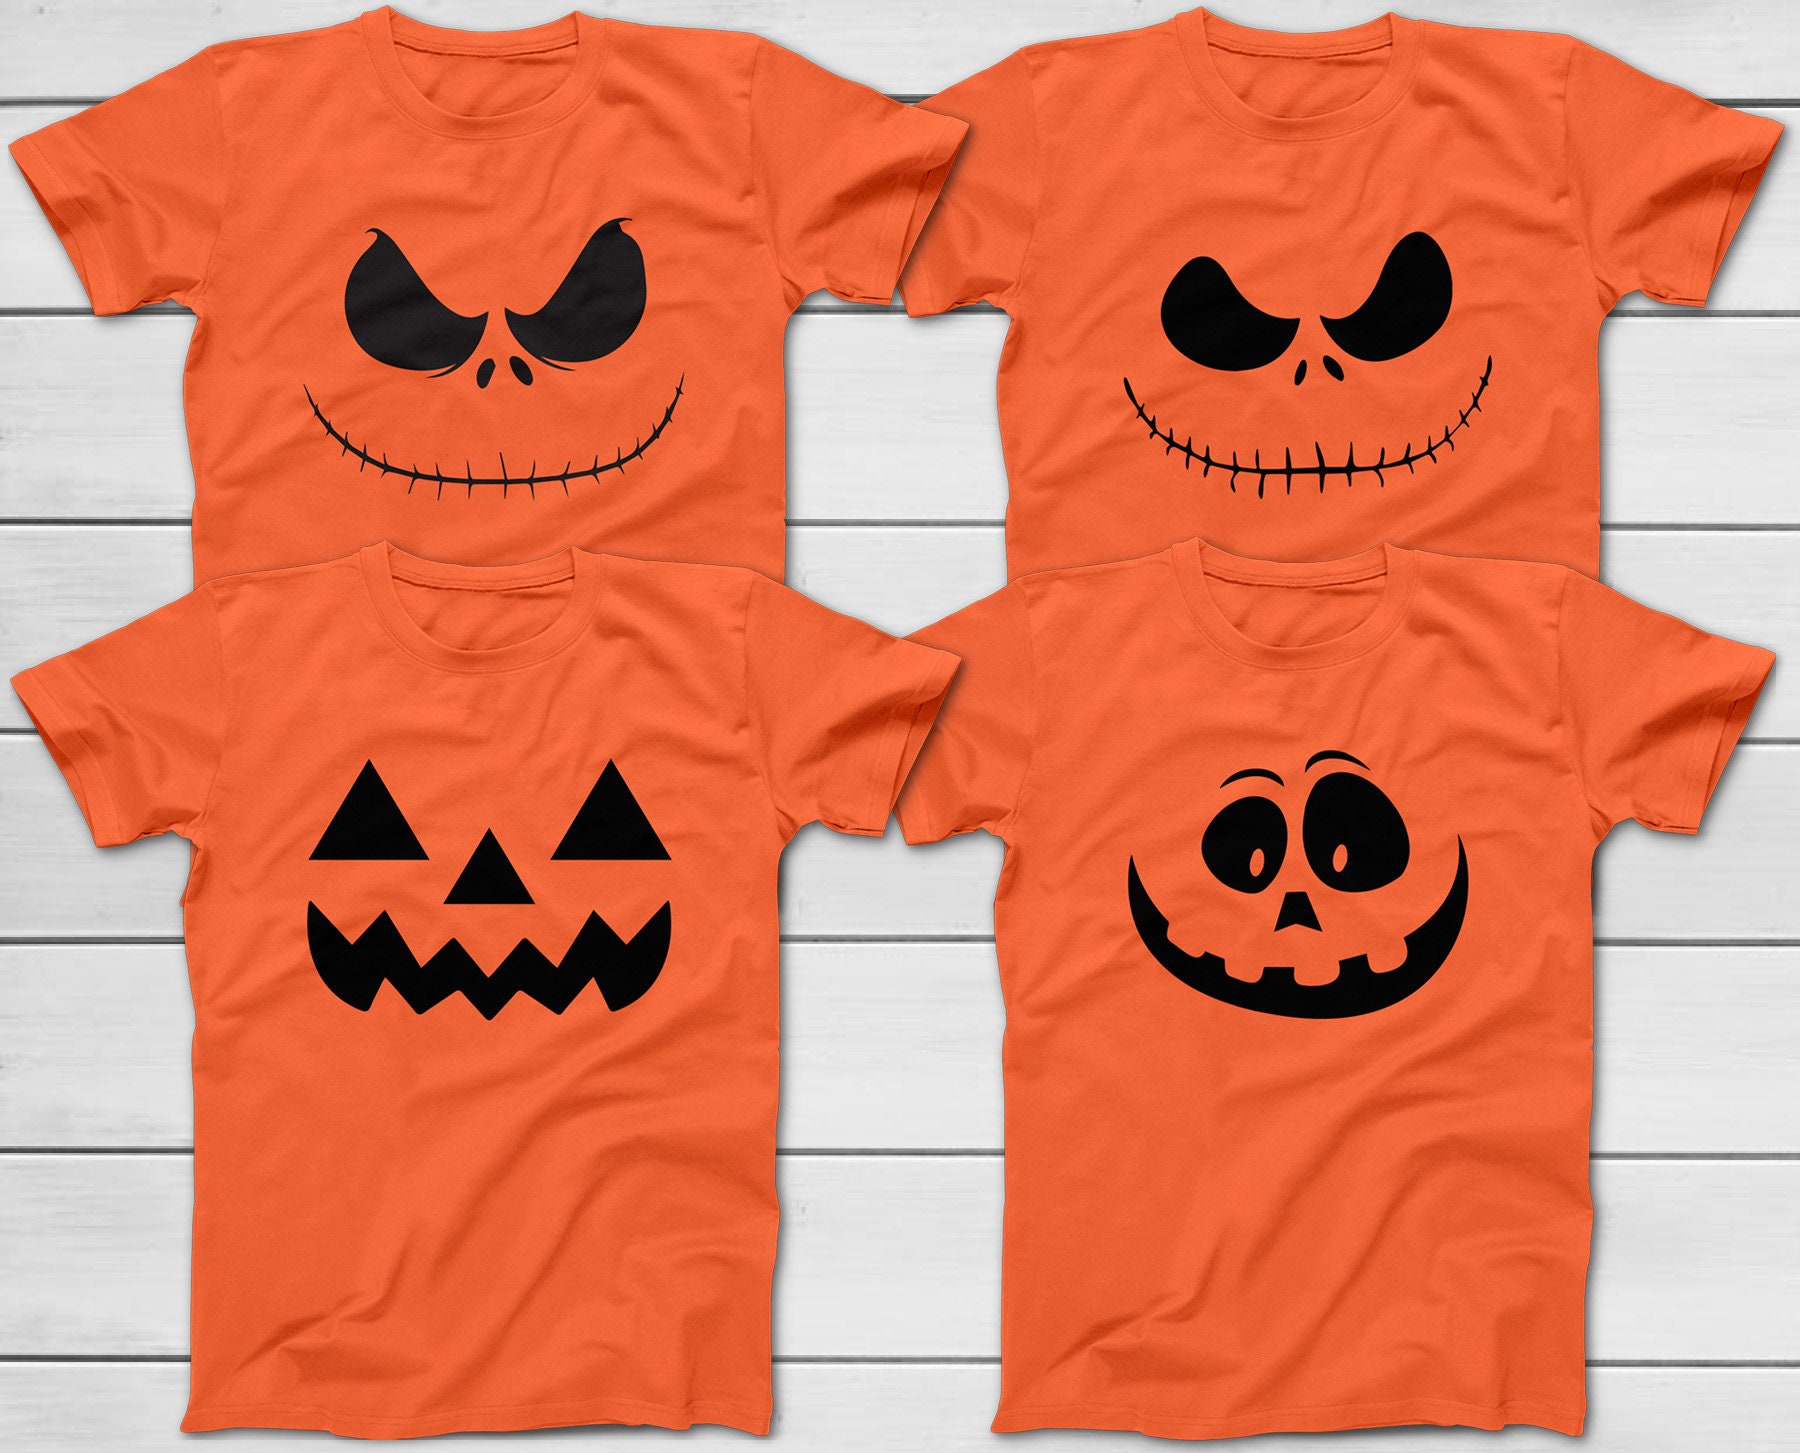 Mens Let's Get Jacked Tshirt Funny Halloween Pumpkin Jack-o-lantern Graphic  Tee (Heather Black) - 4XL